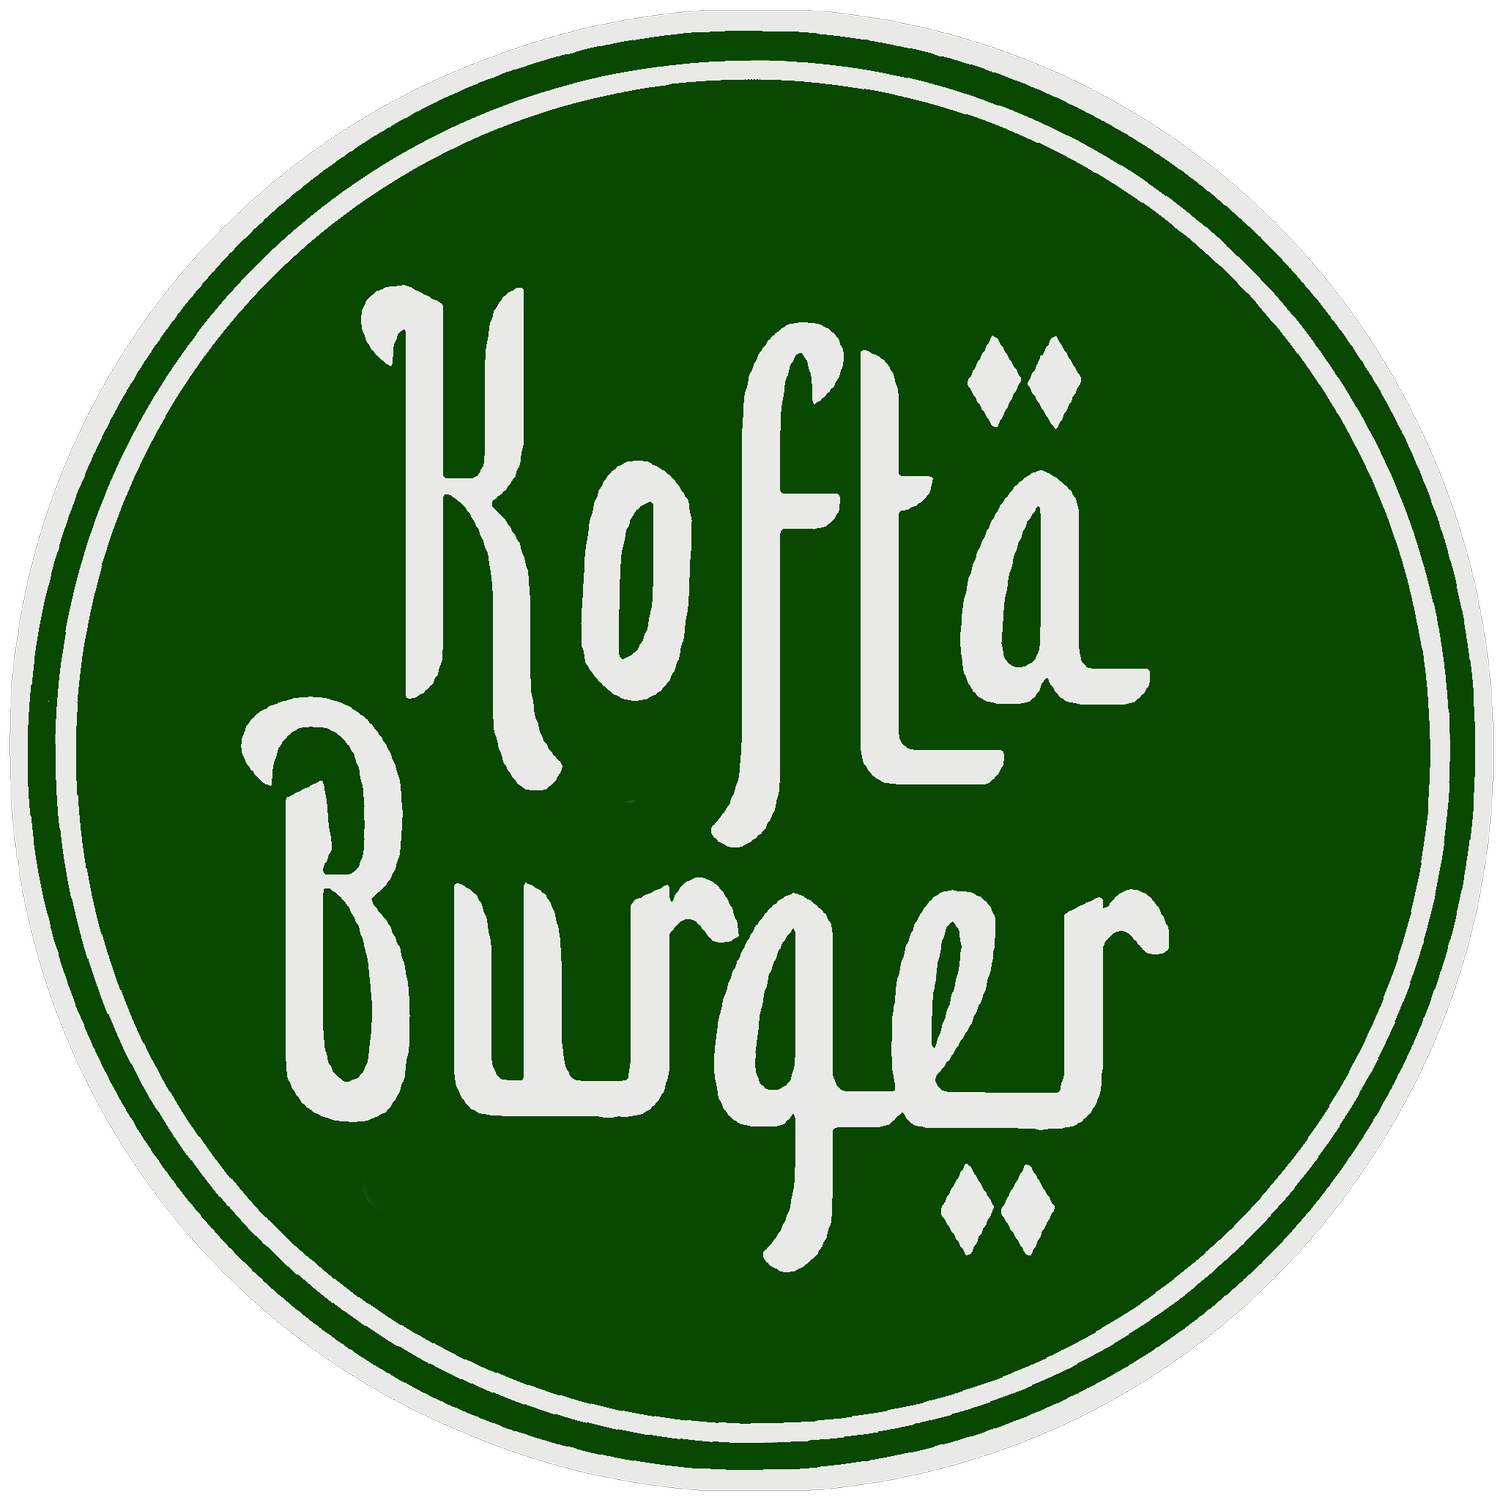 Kofta Burger